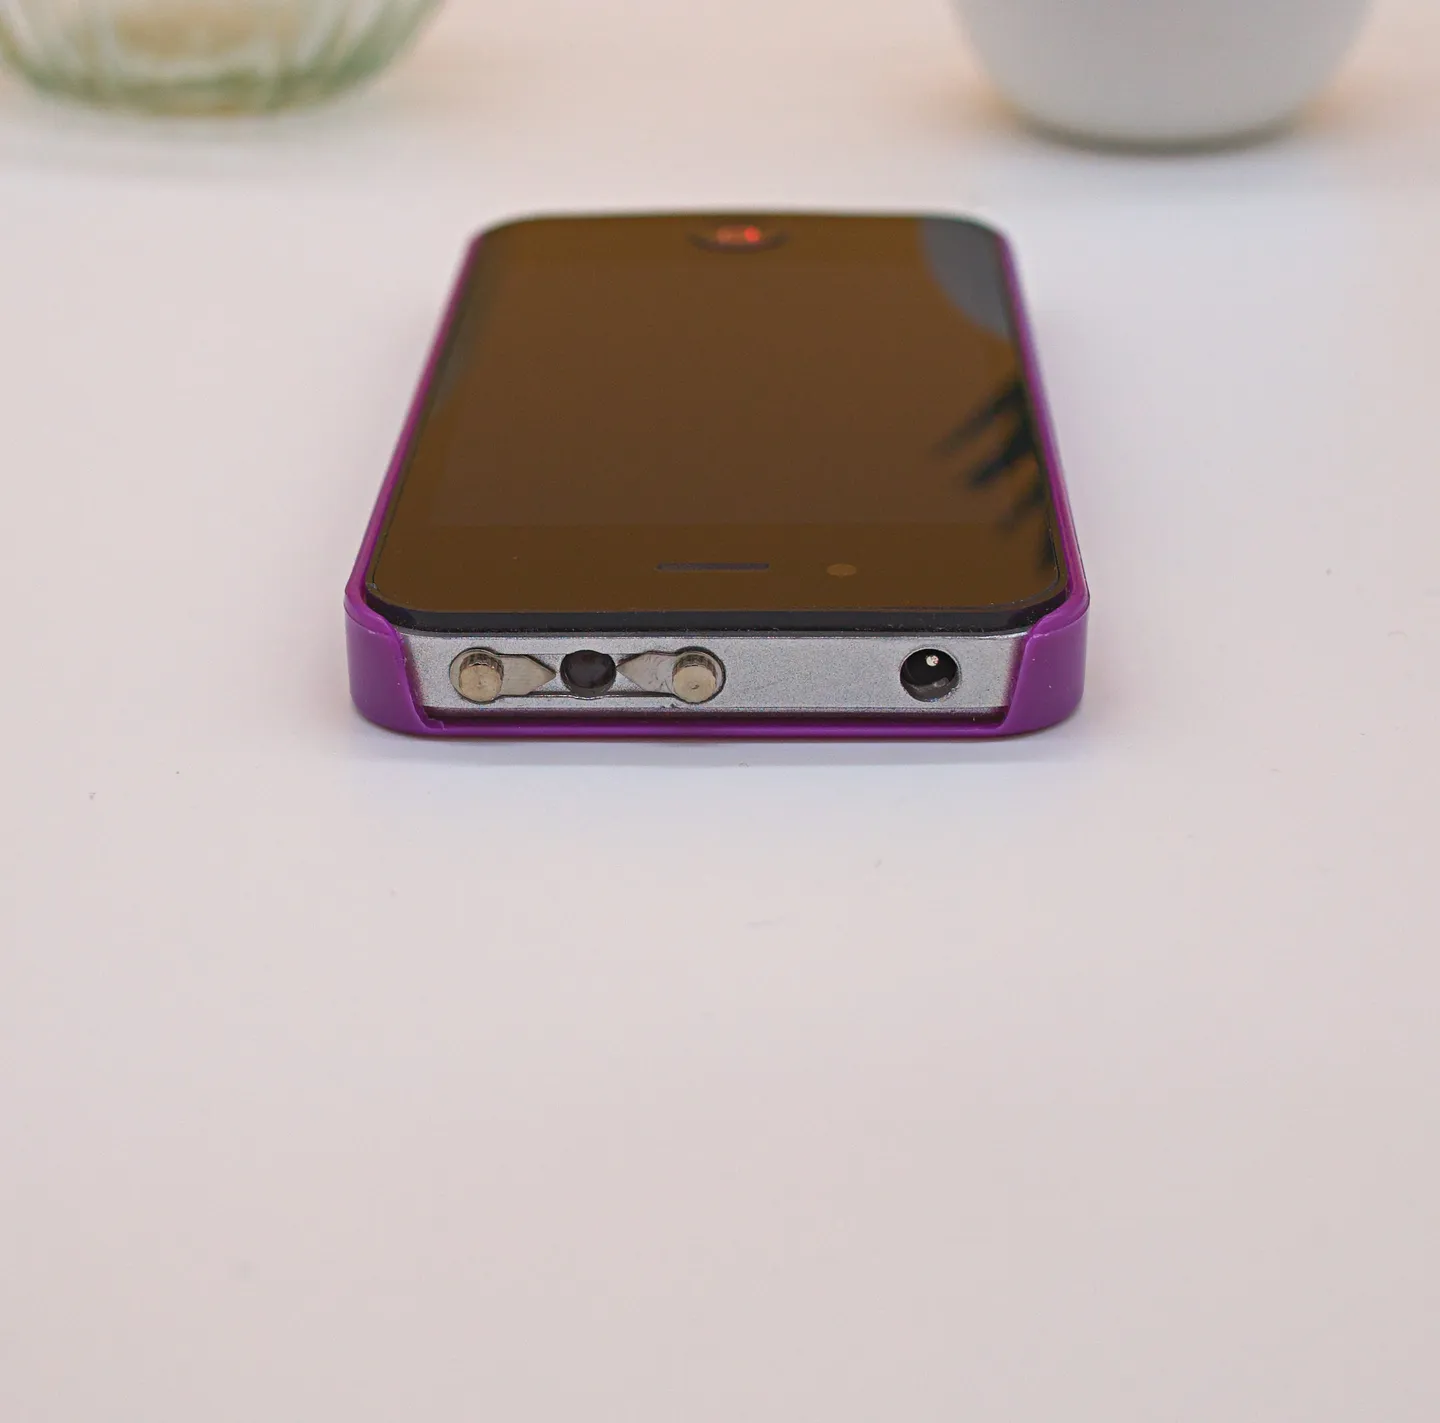 Elektroschocker & Taser - Iphone Shocker Taser, 2 400 000 Volt, elegant und diskret (Violette Version)